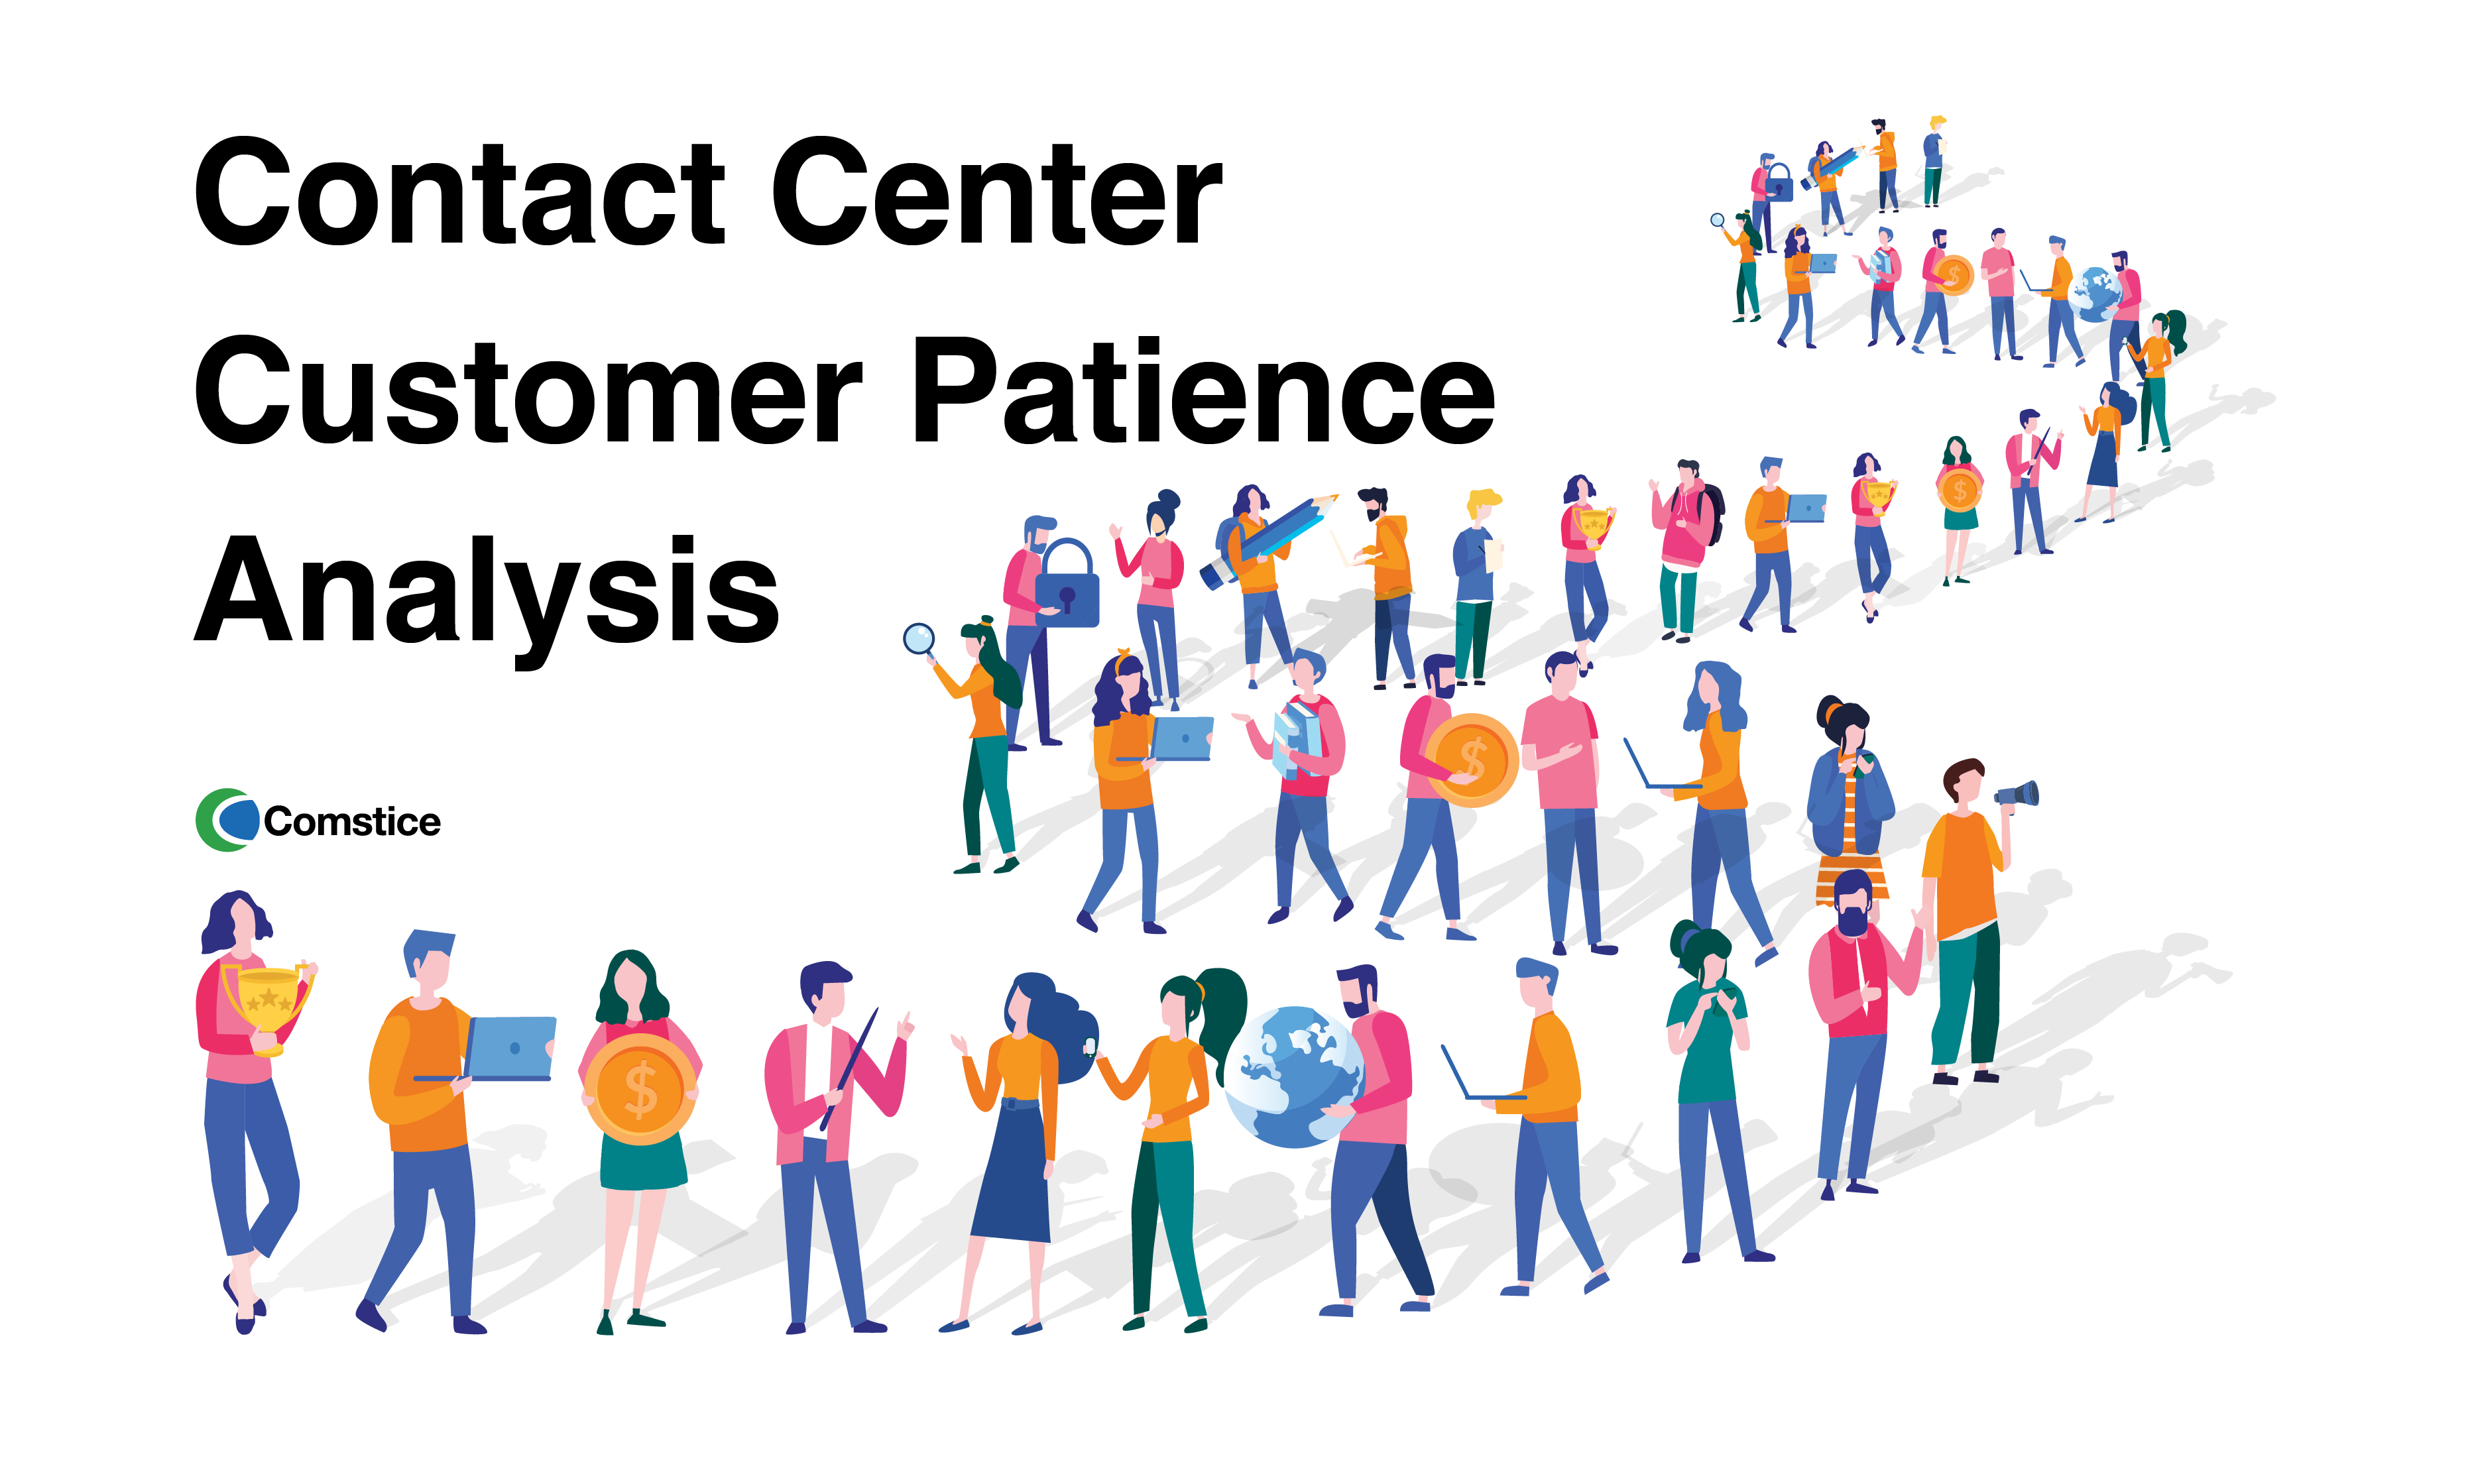 Contact Center Customer Patience Analysis